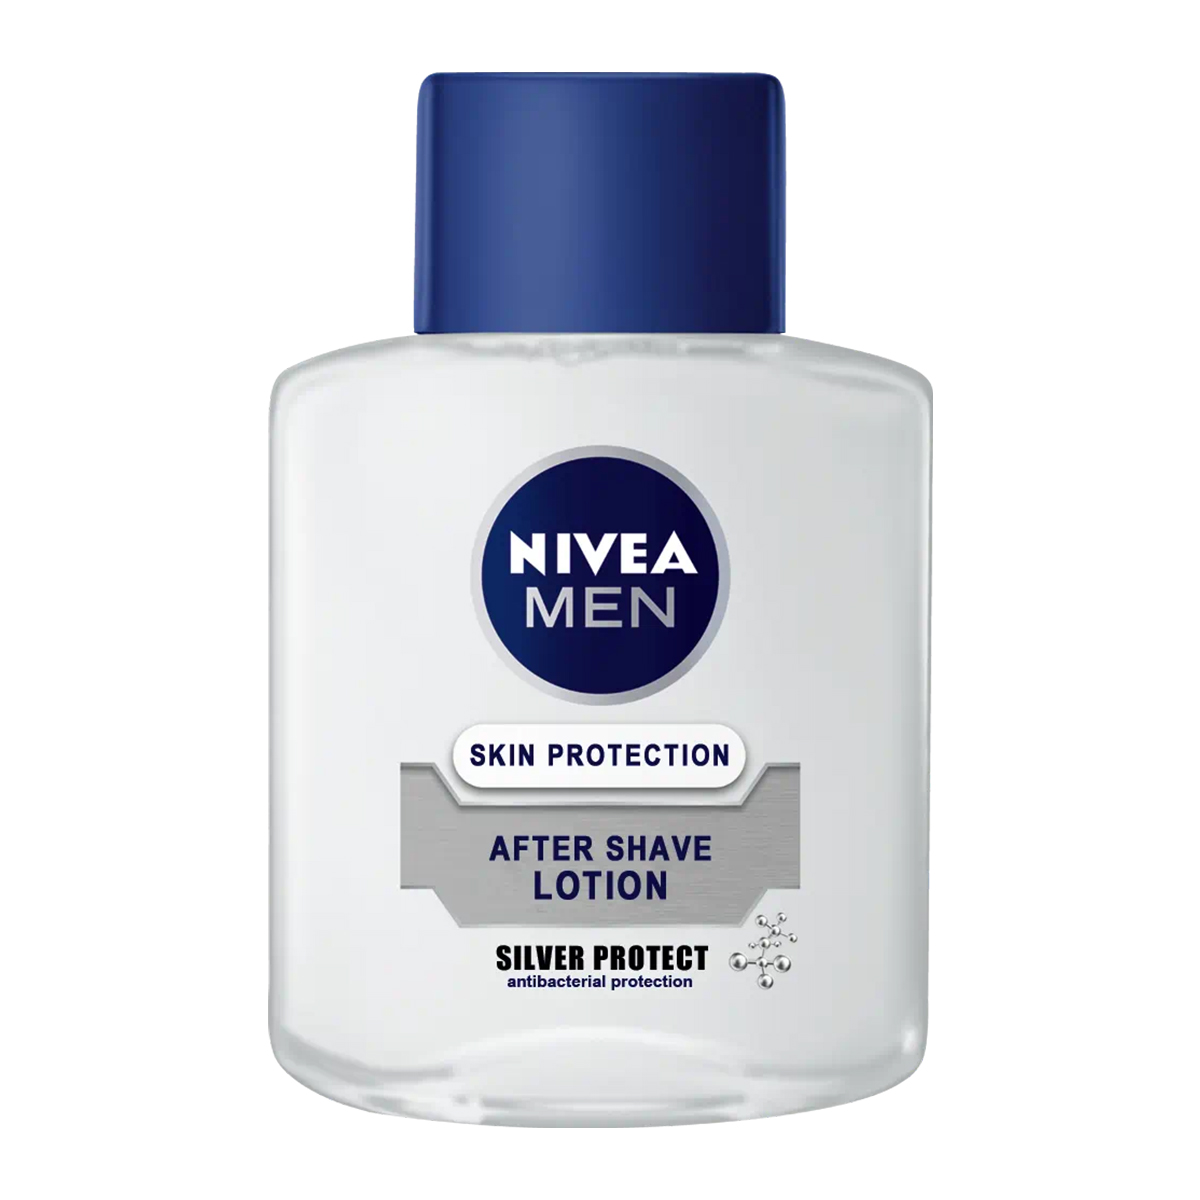 لوسیون افتر شیو اسکین پروتکشن~Skin Protection Aftershave Lotion~NIVEA